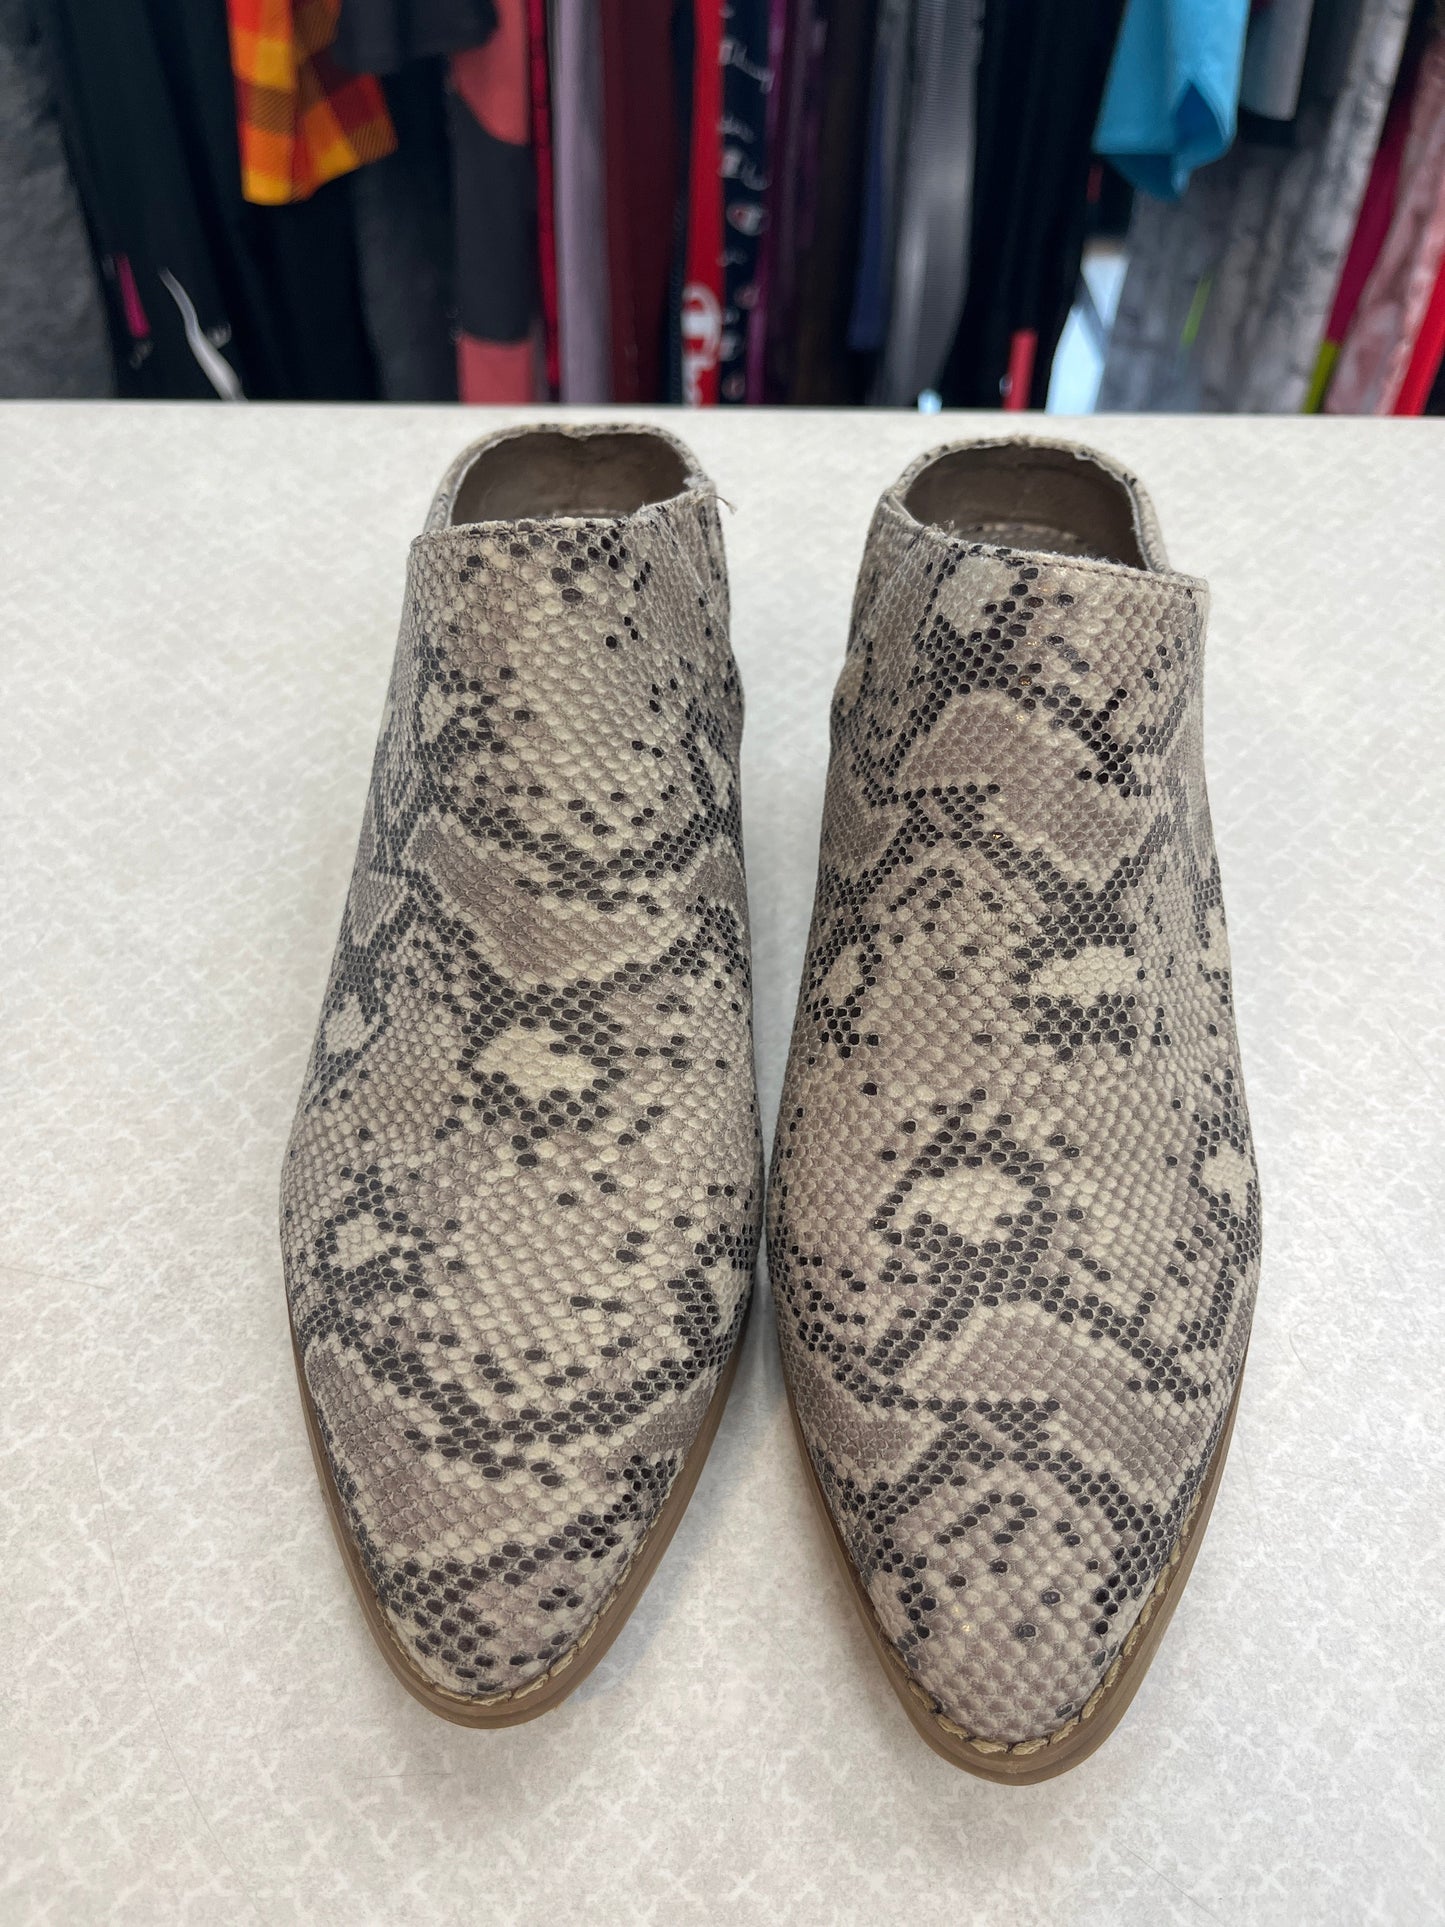 Snakeskin Print Shoes Heels Block Sugar, Size 9